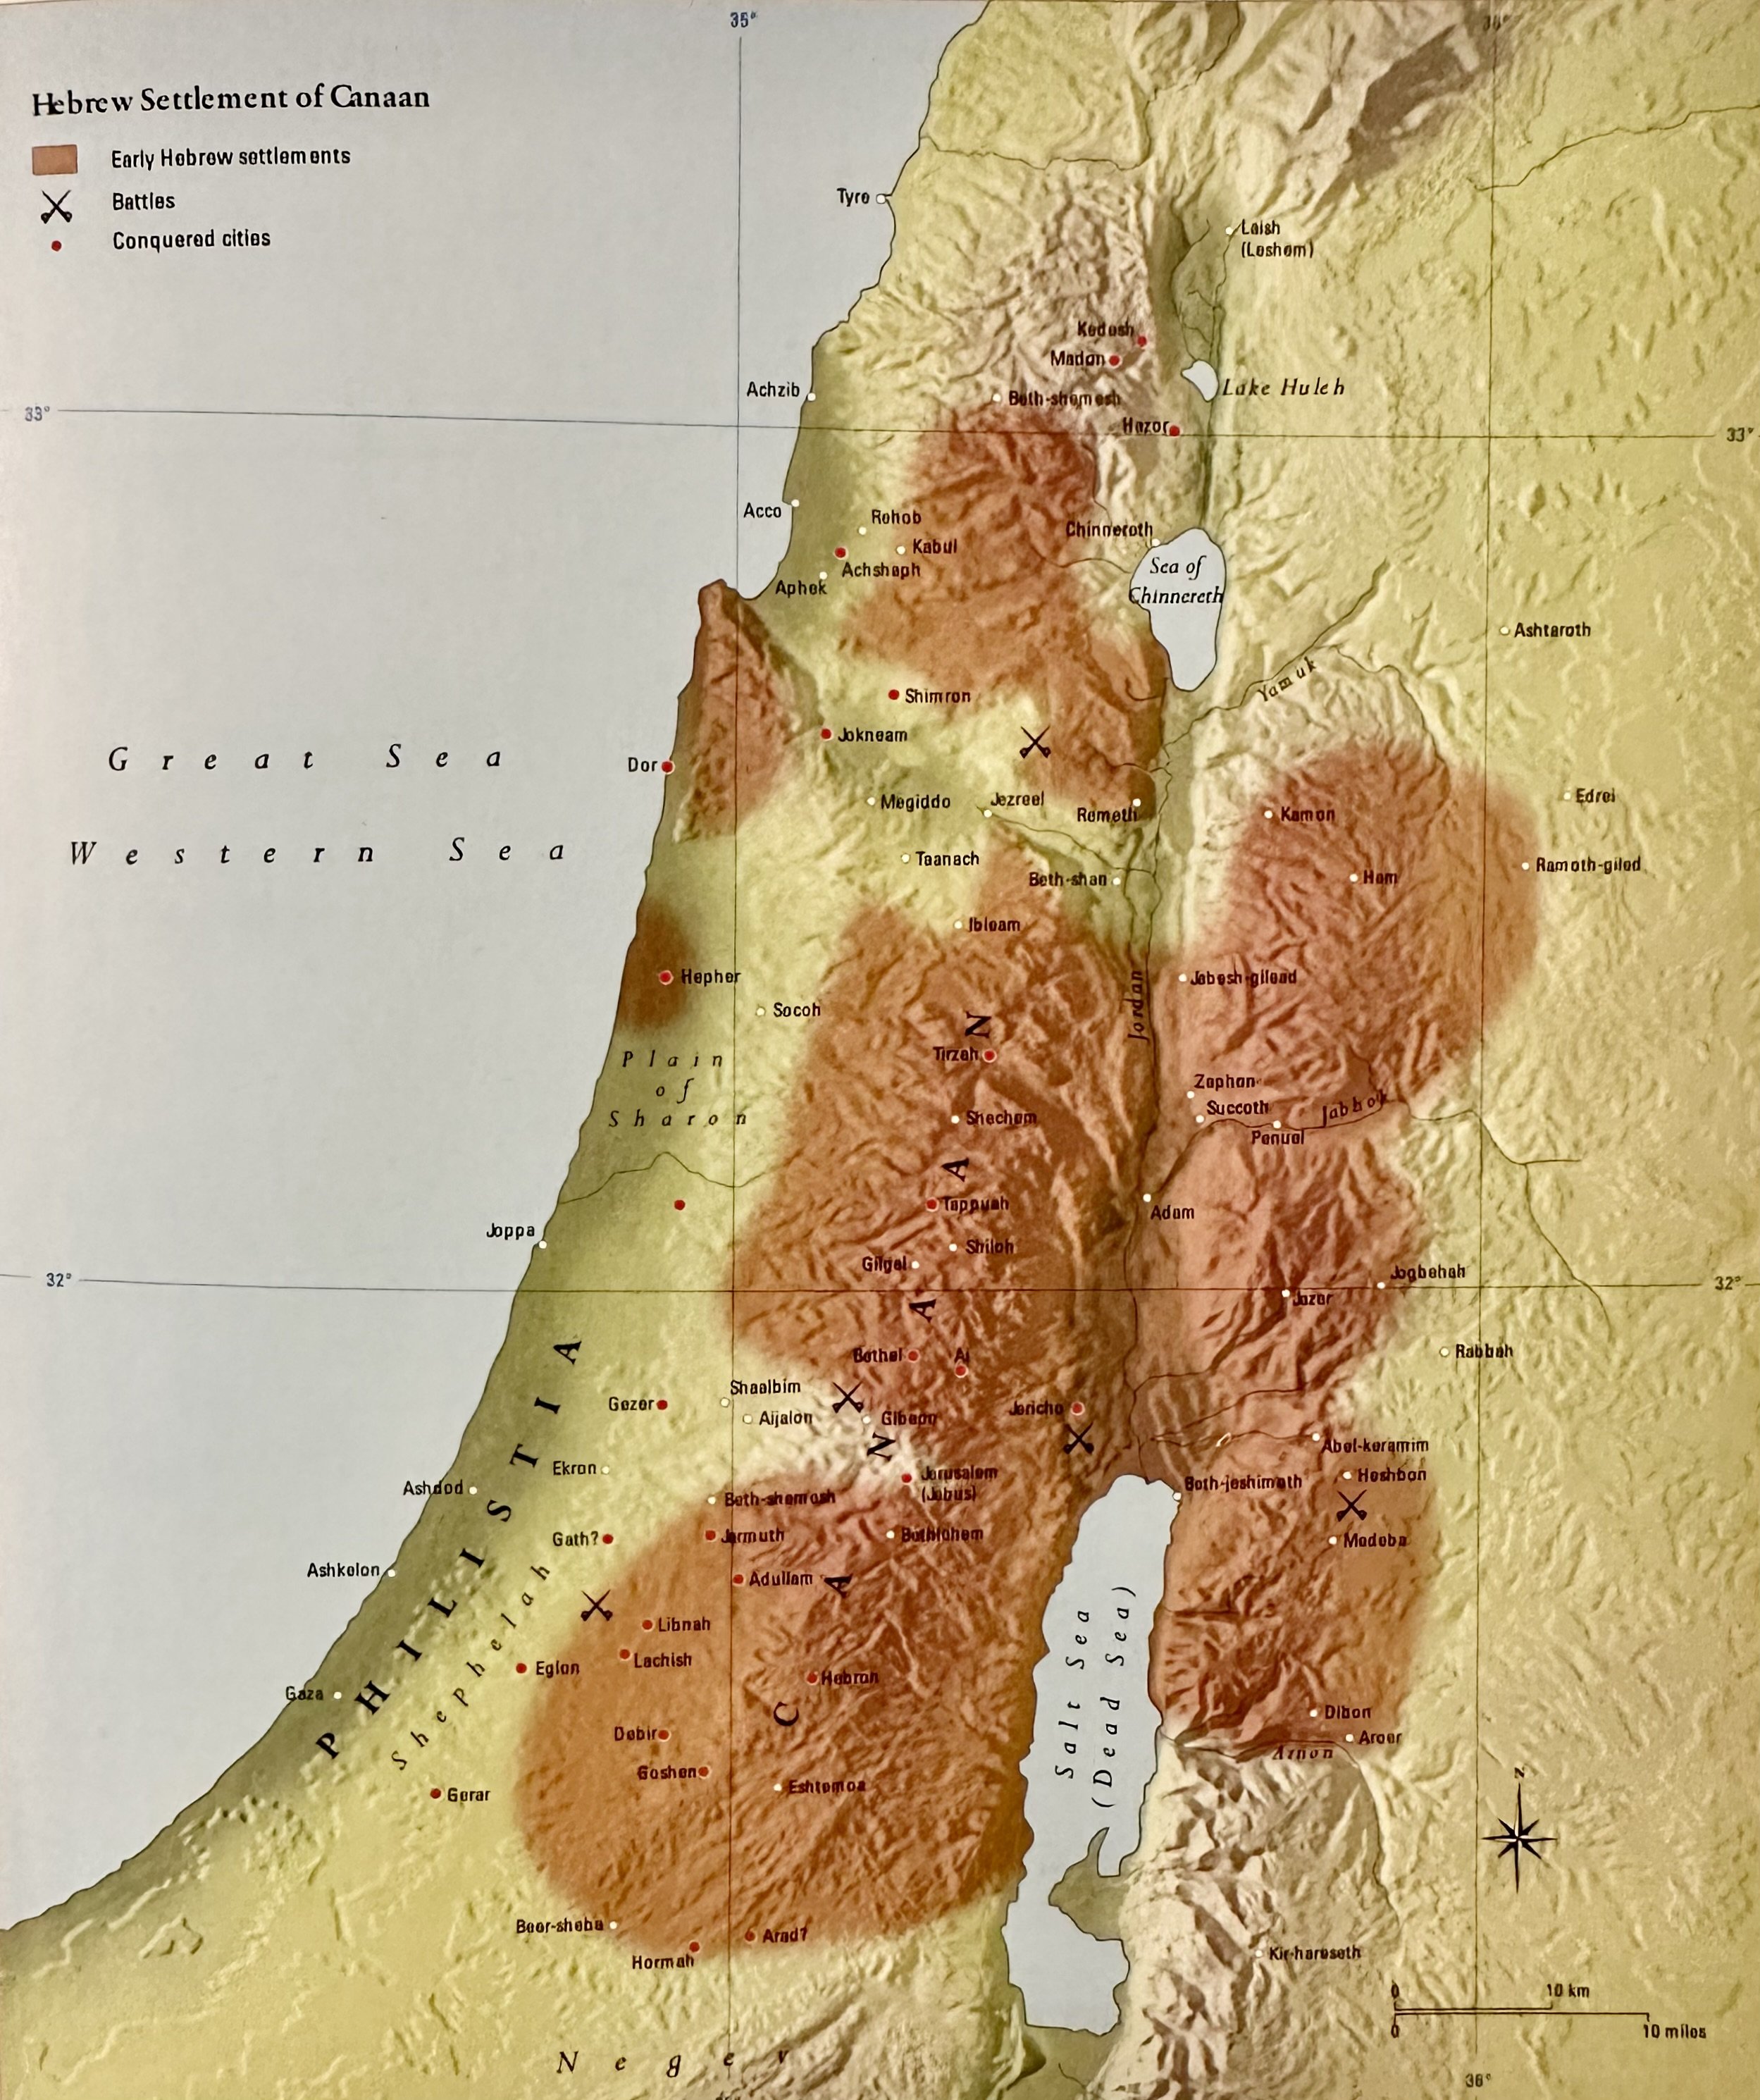 ~1200 BCE Hebrew Settlements of Canaan Atlas of the Bible.jpeg